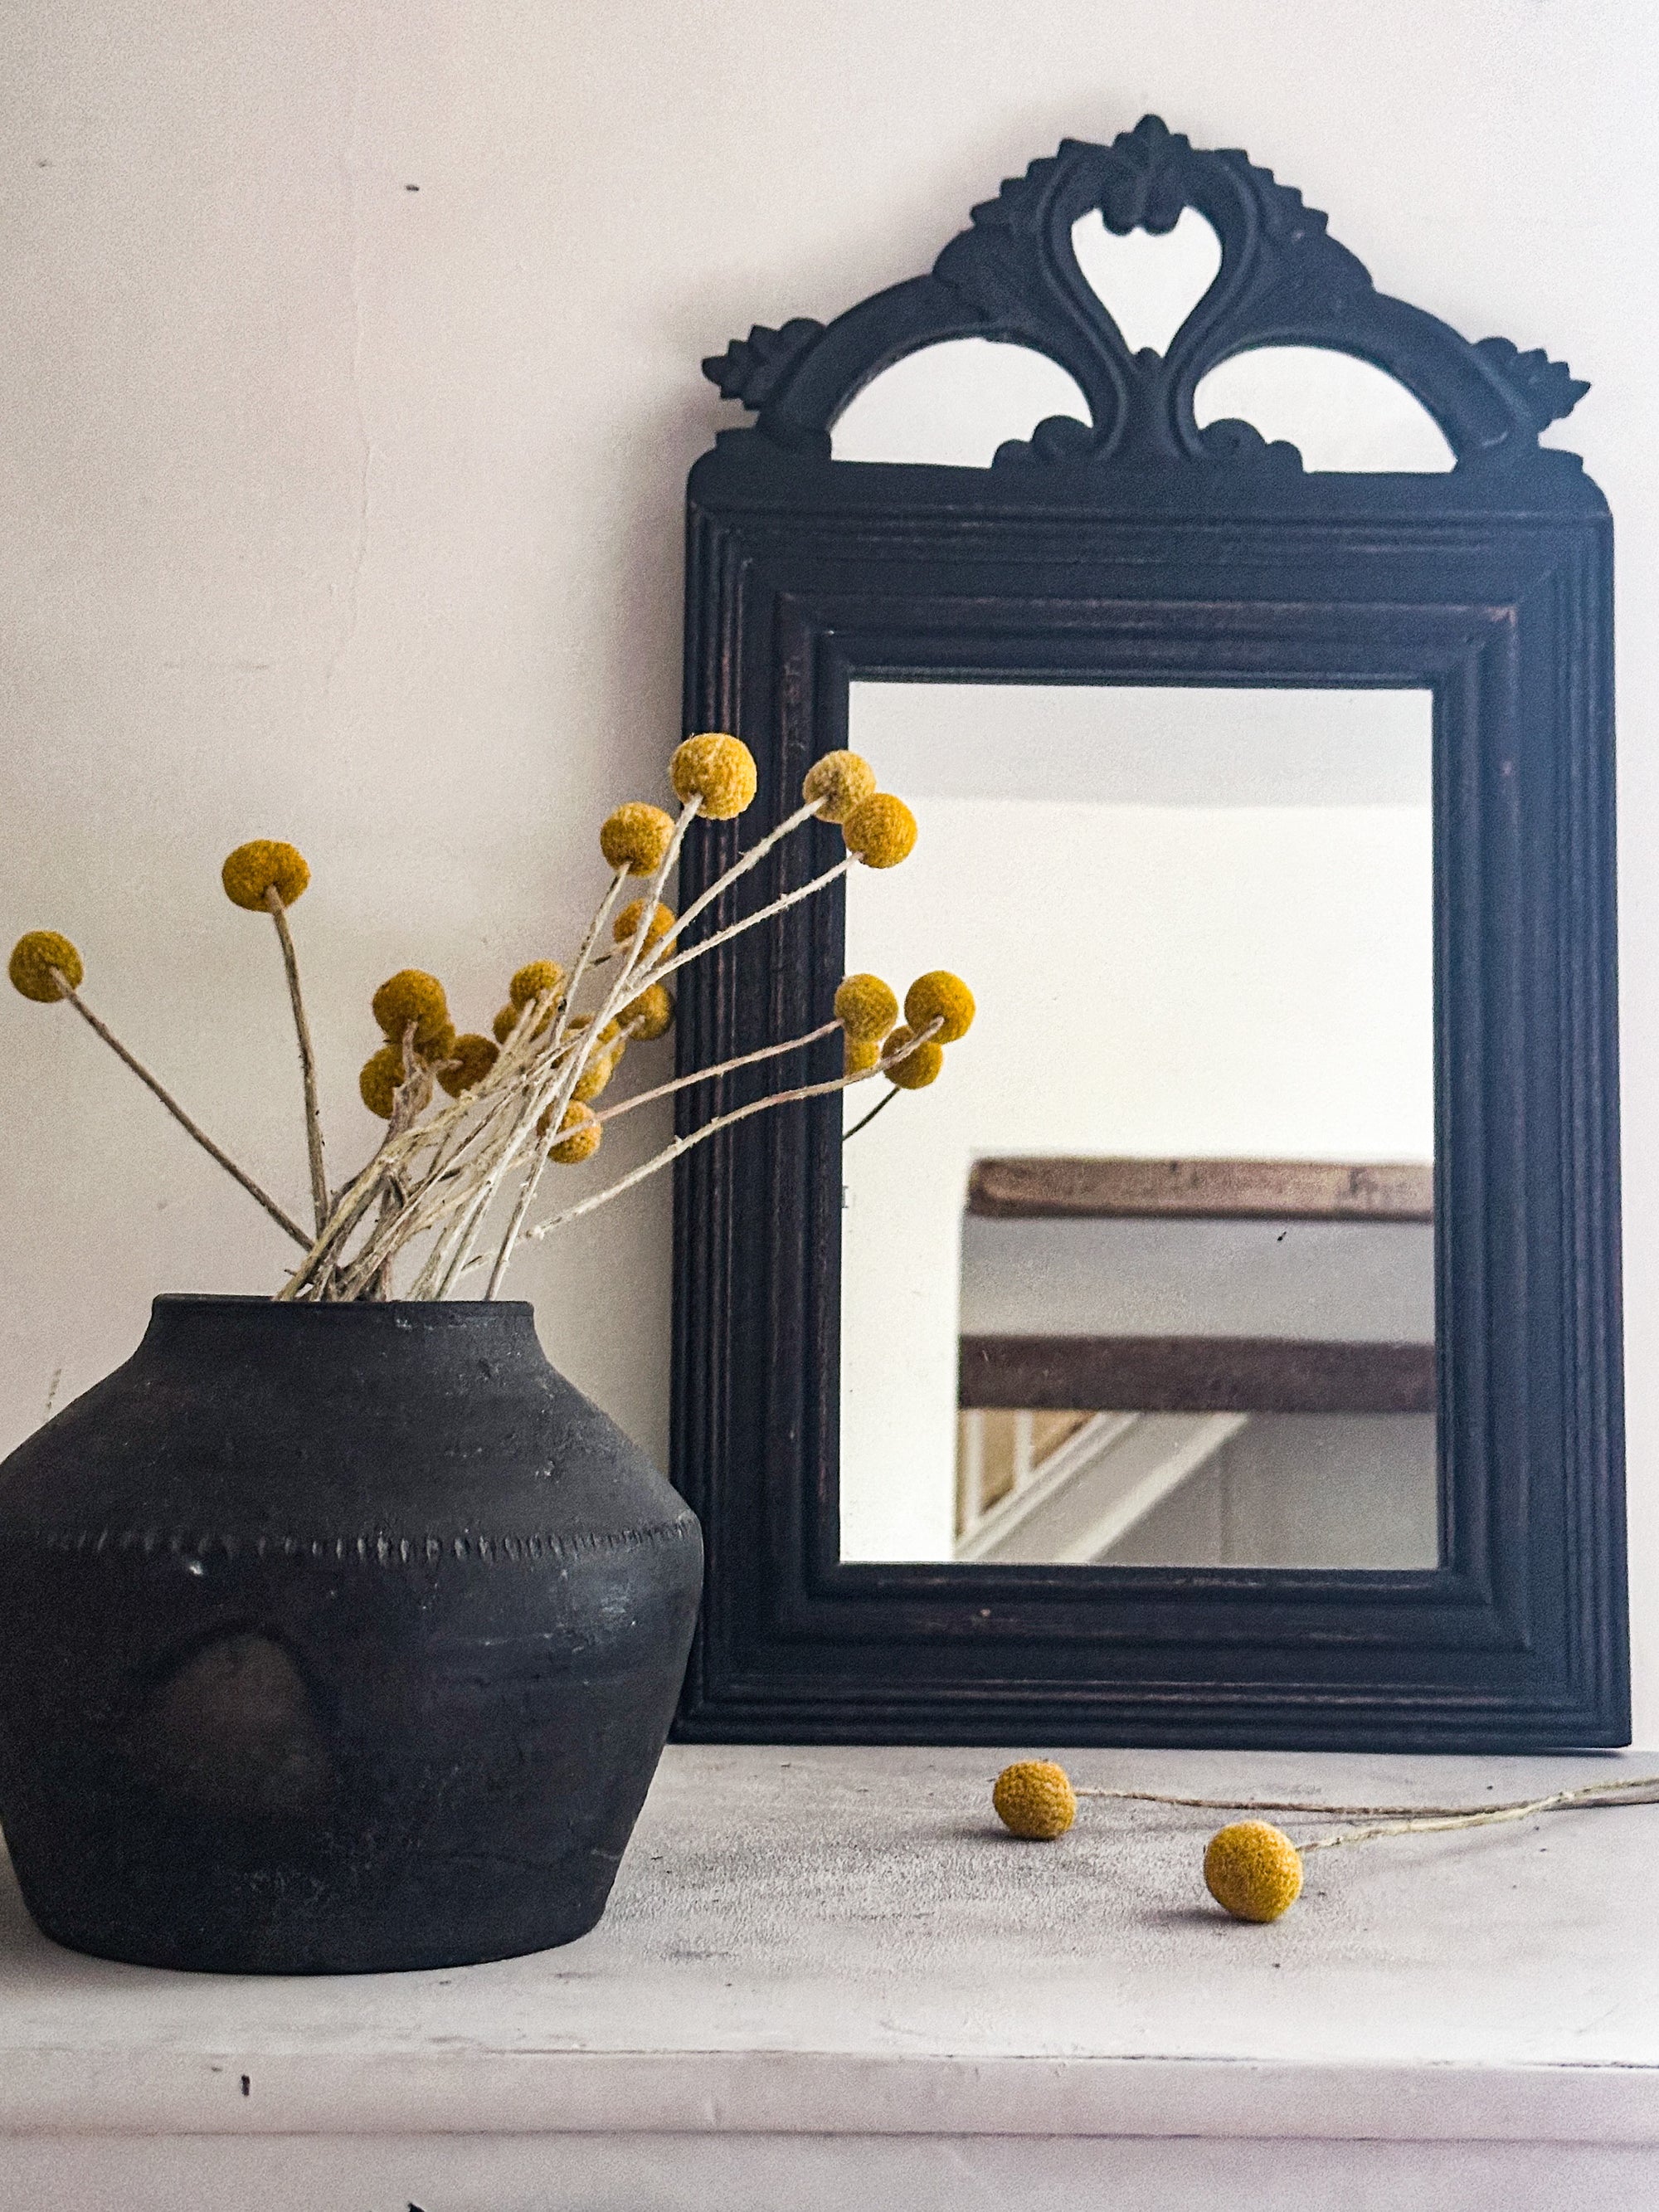 Black wooden vintage mirror